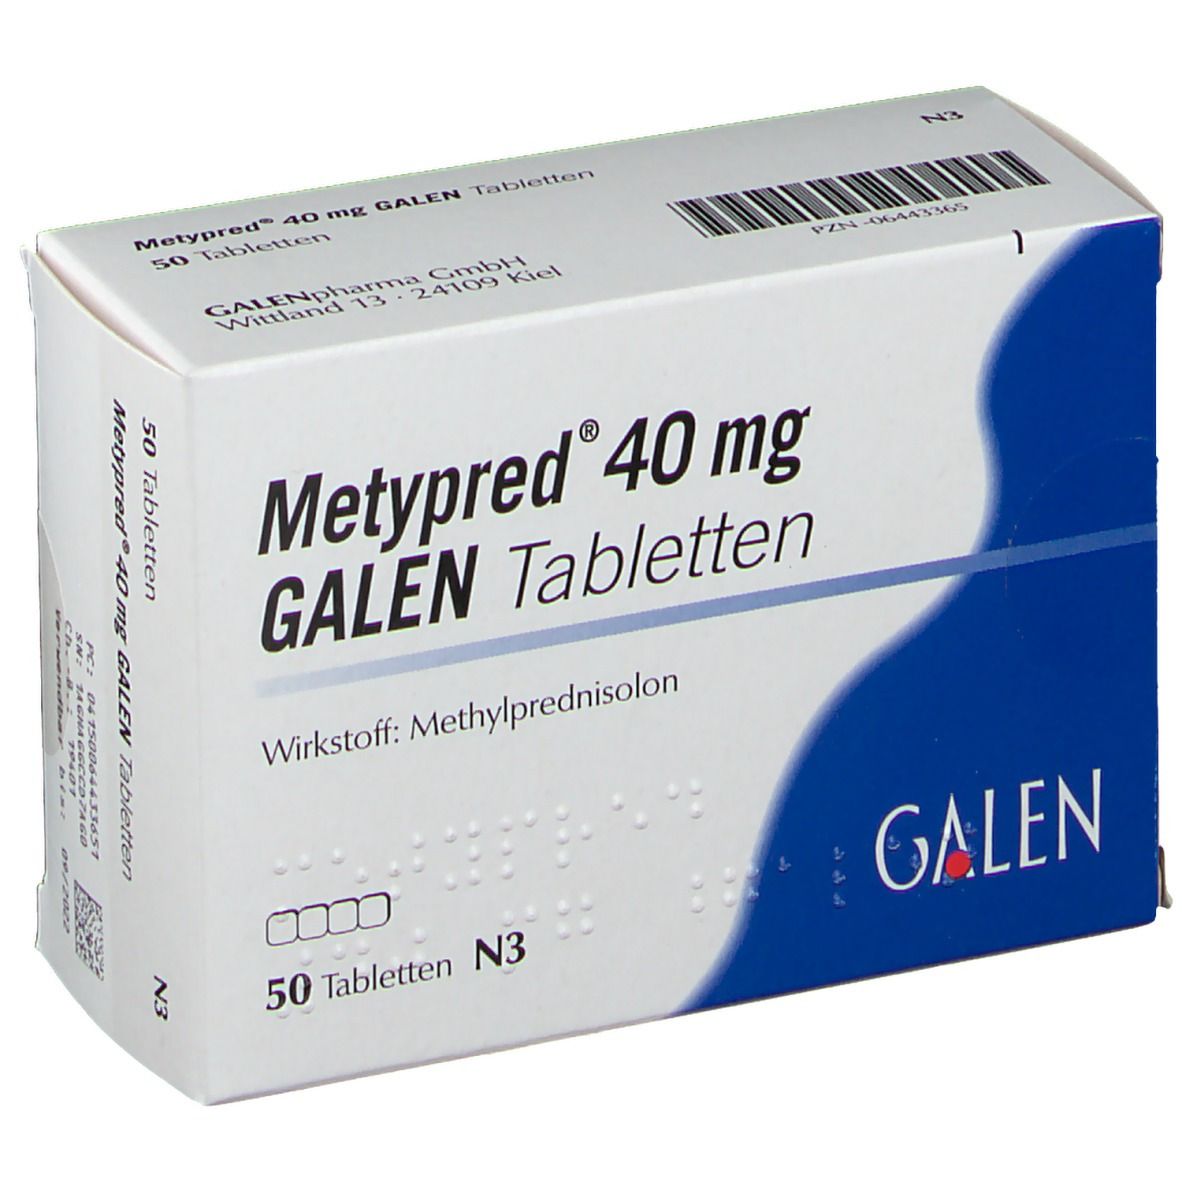 Metypred® 40 mg GALEN